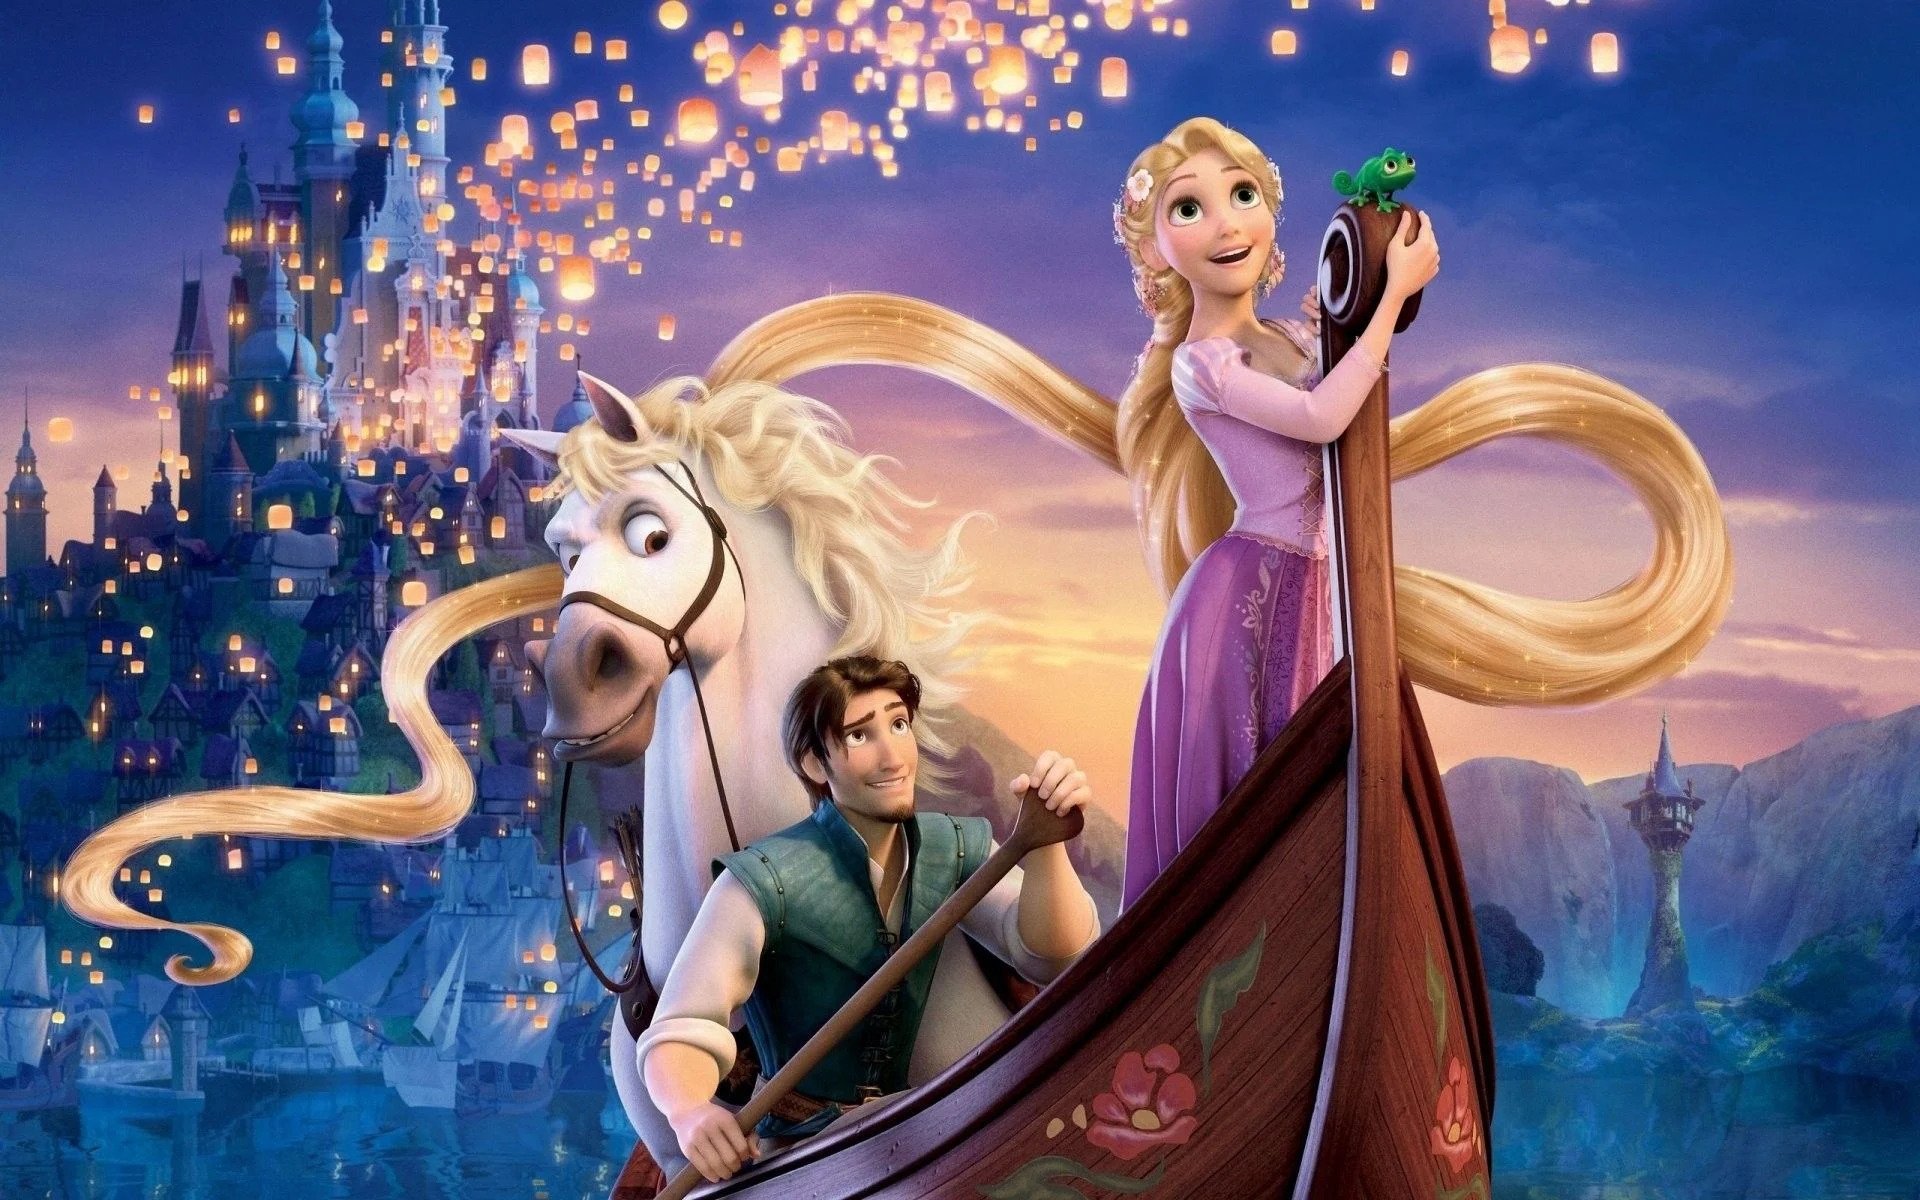 How Tall Is Rapunzel - The Magical Hair Disney Princess